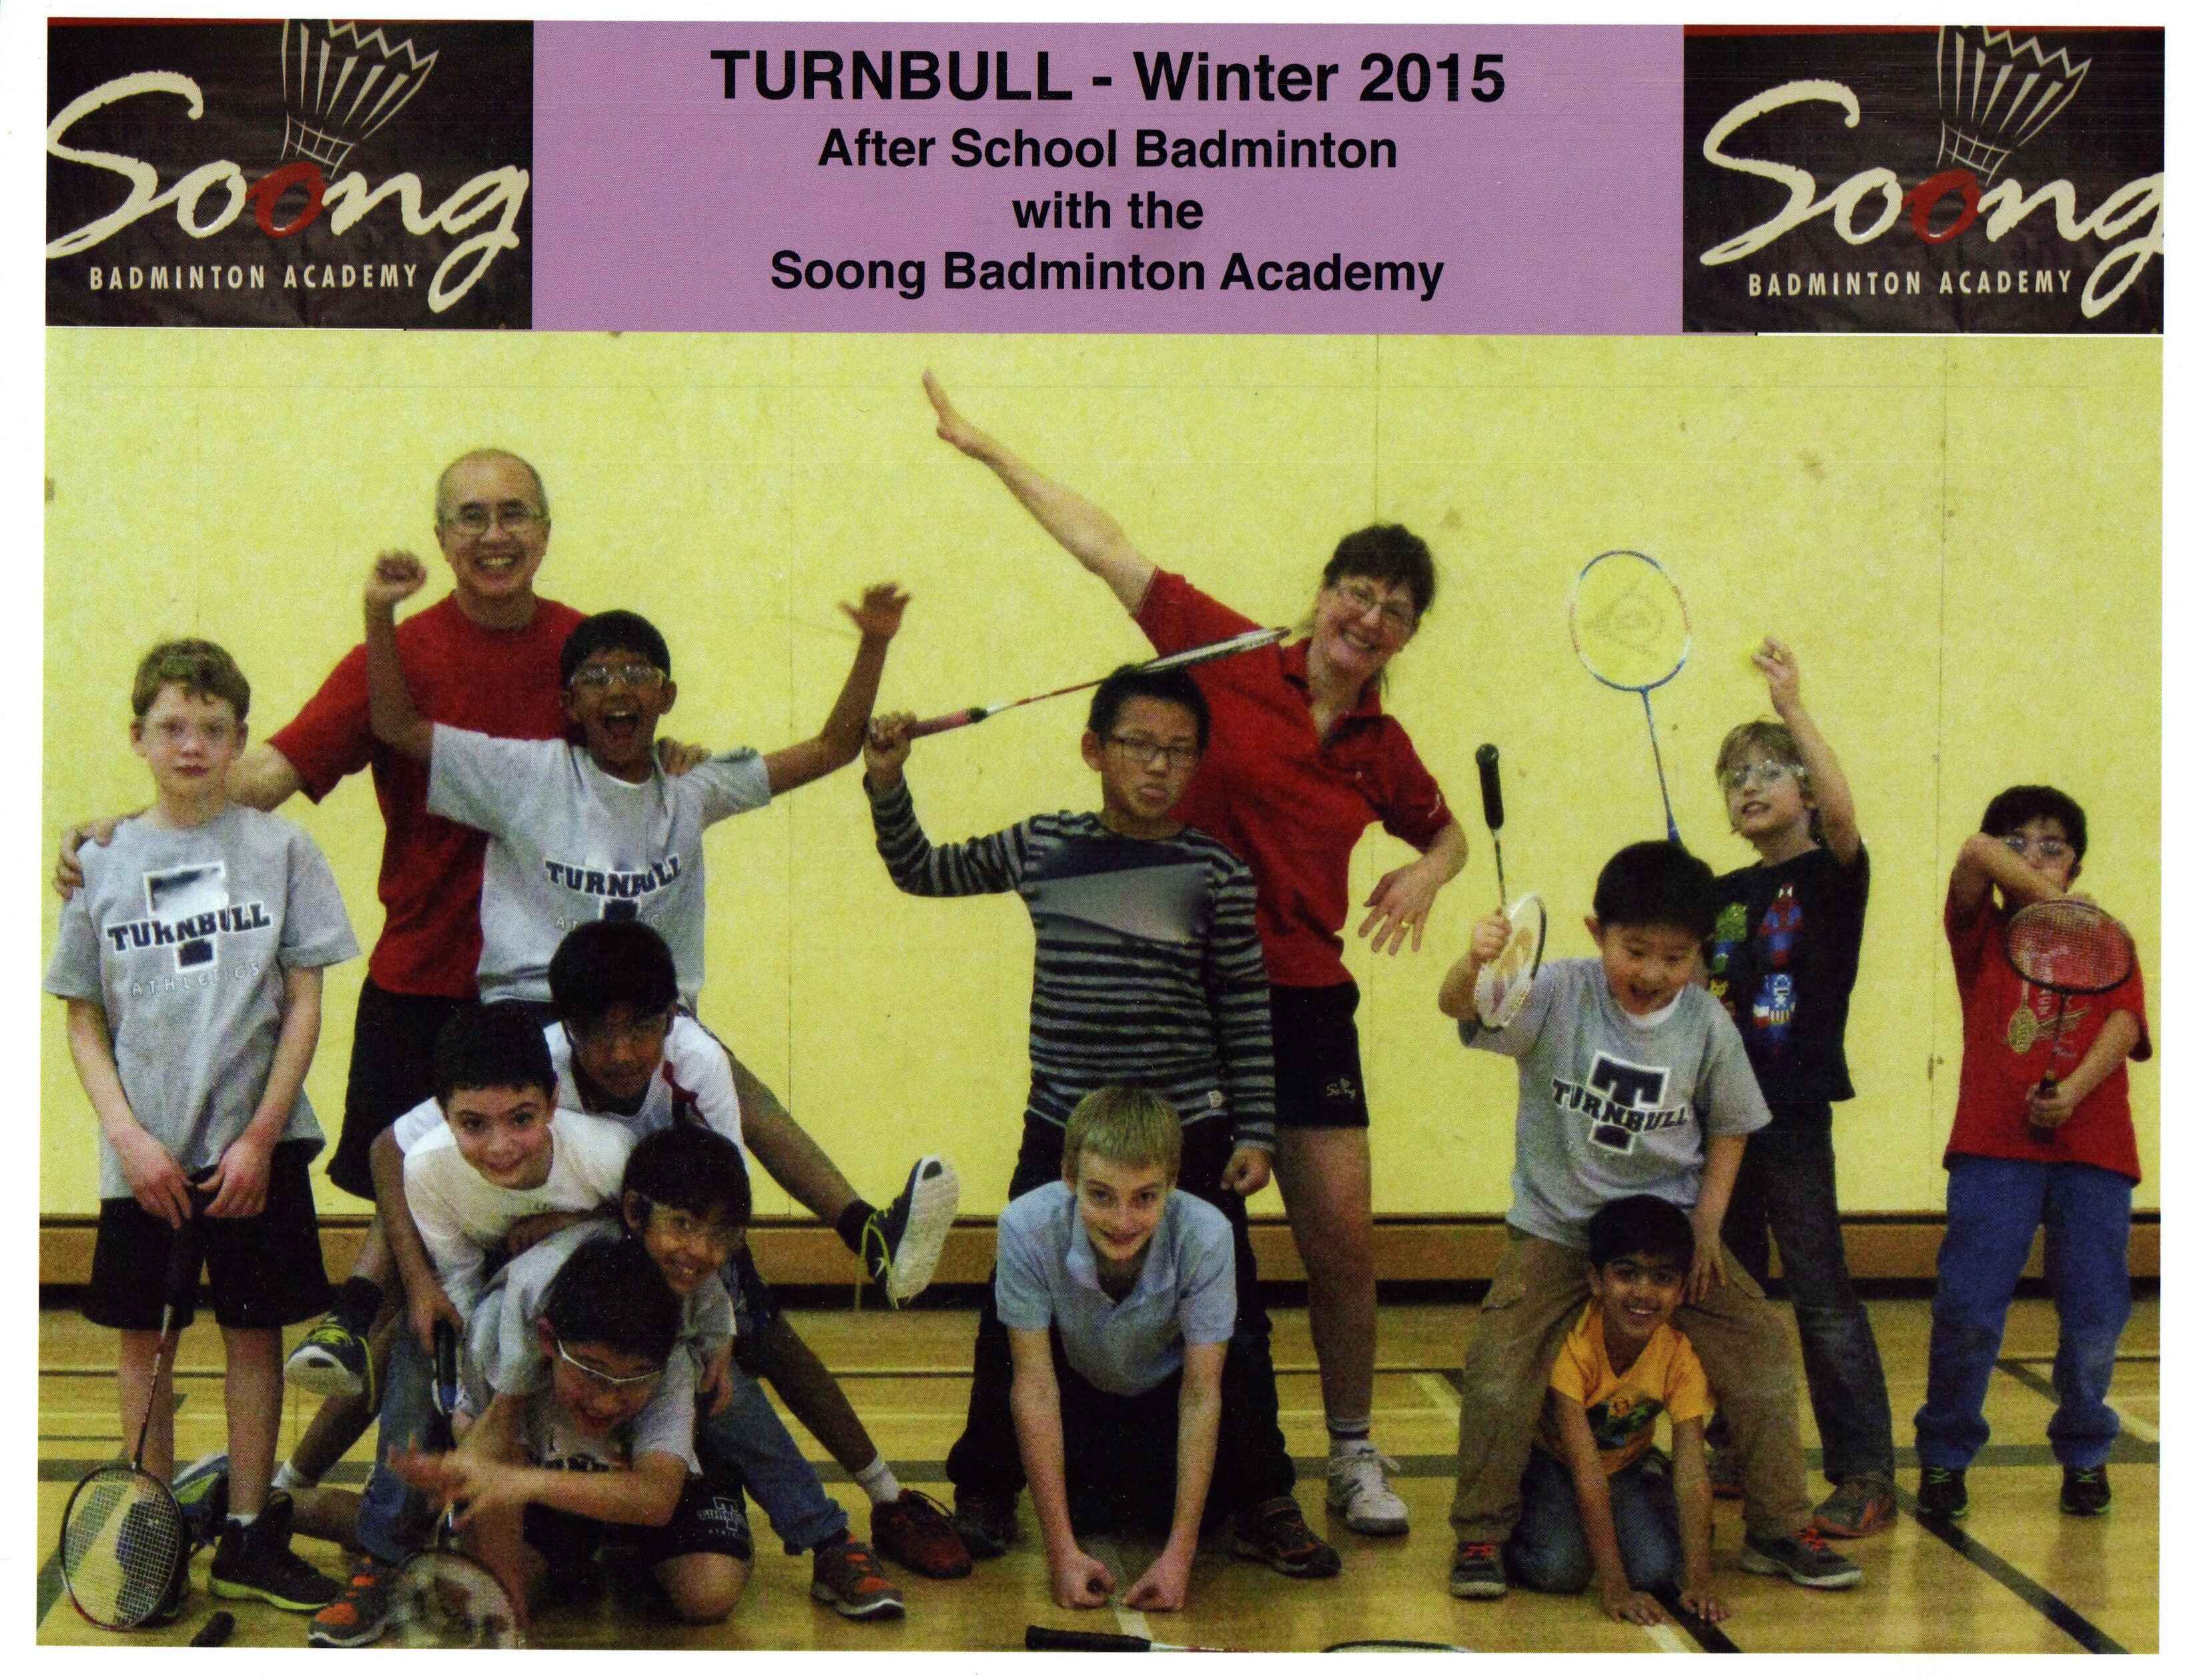 2015-Winter-Turnbull-WeeklyTraining.jpg